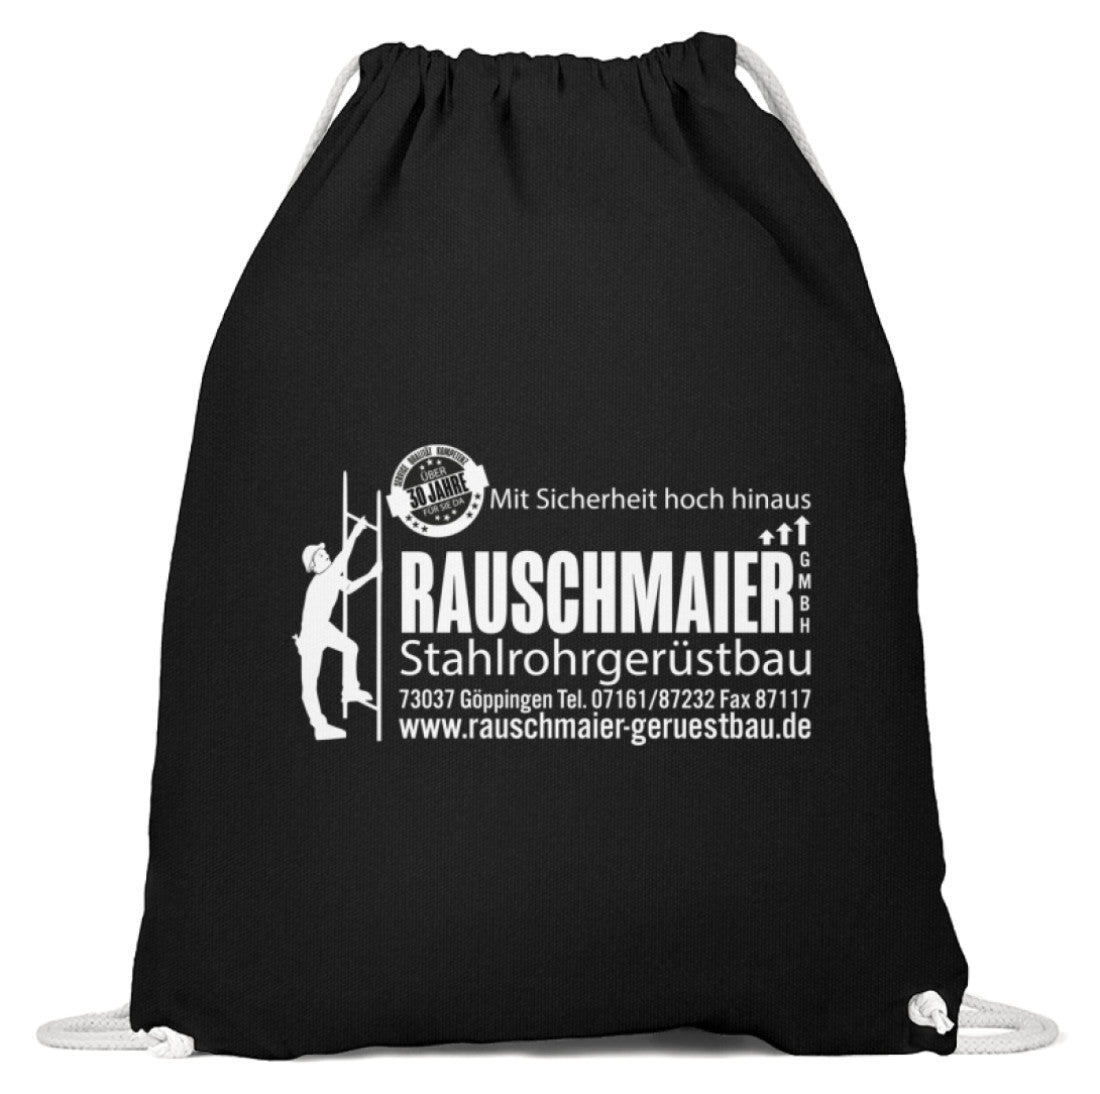 Gerüstbau Rauschmaier  - Baumwoll Gymsac €18.95 Gerüstbauer - Shop >>